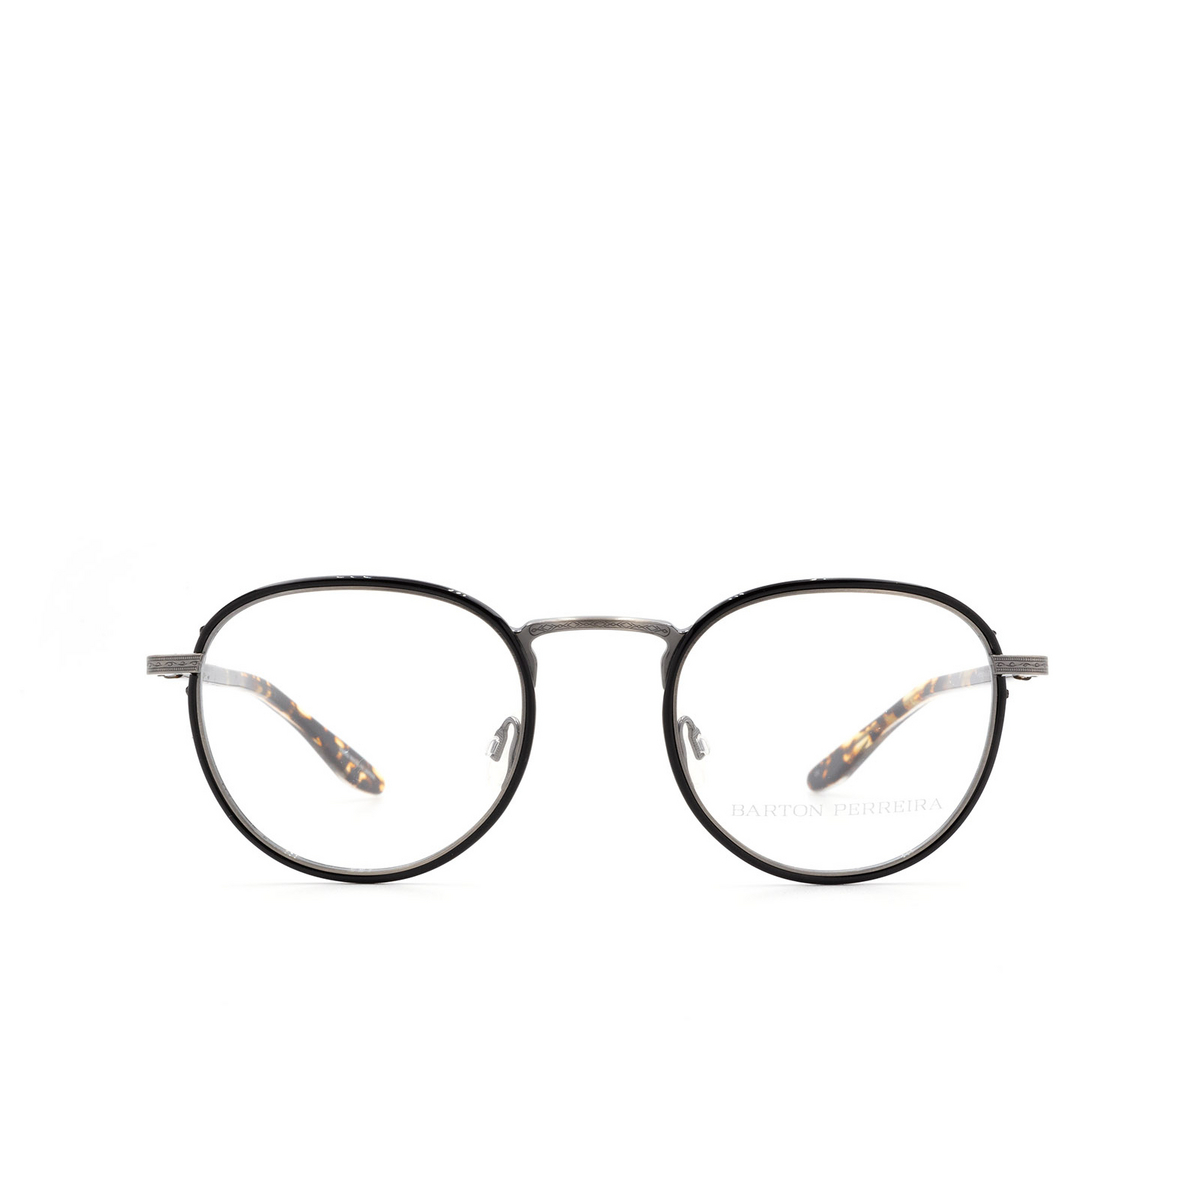 Barton Perreira® Round Eyeglasses: Lantz color Bla/pew - front view.